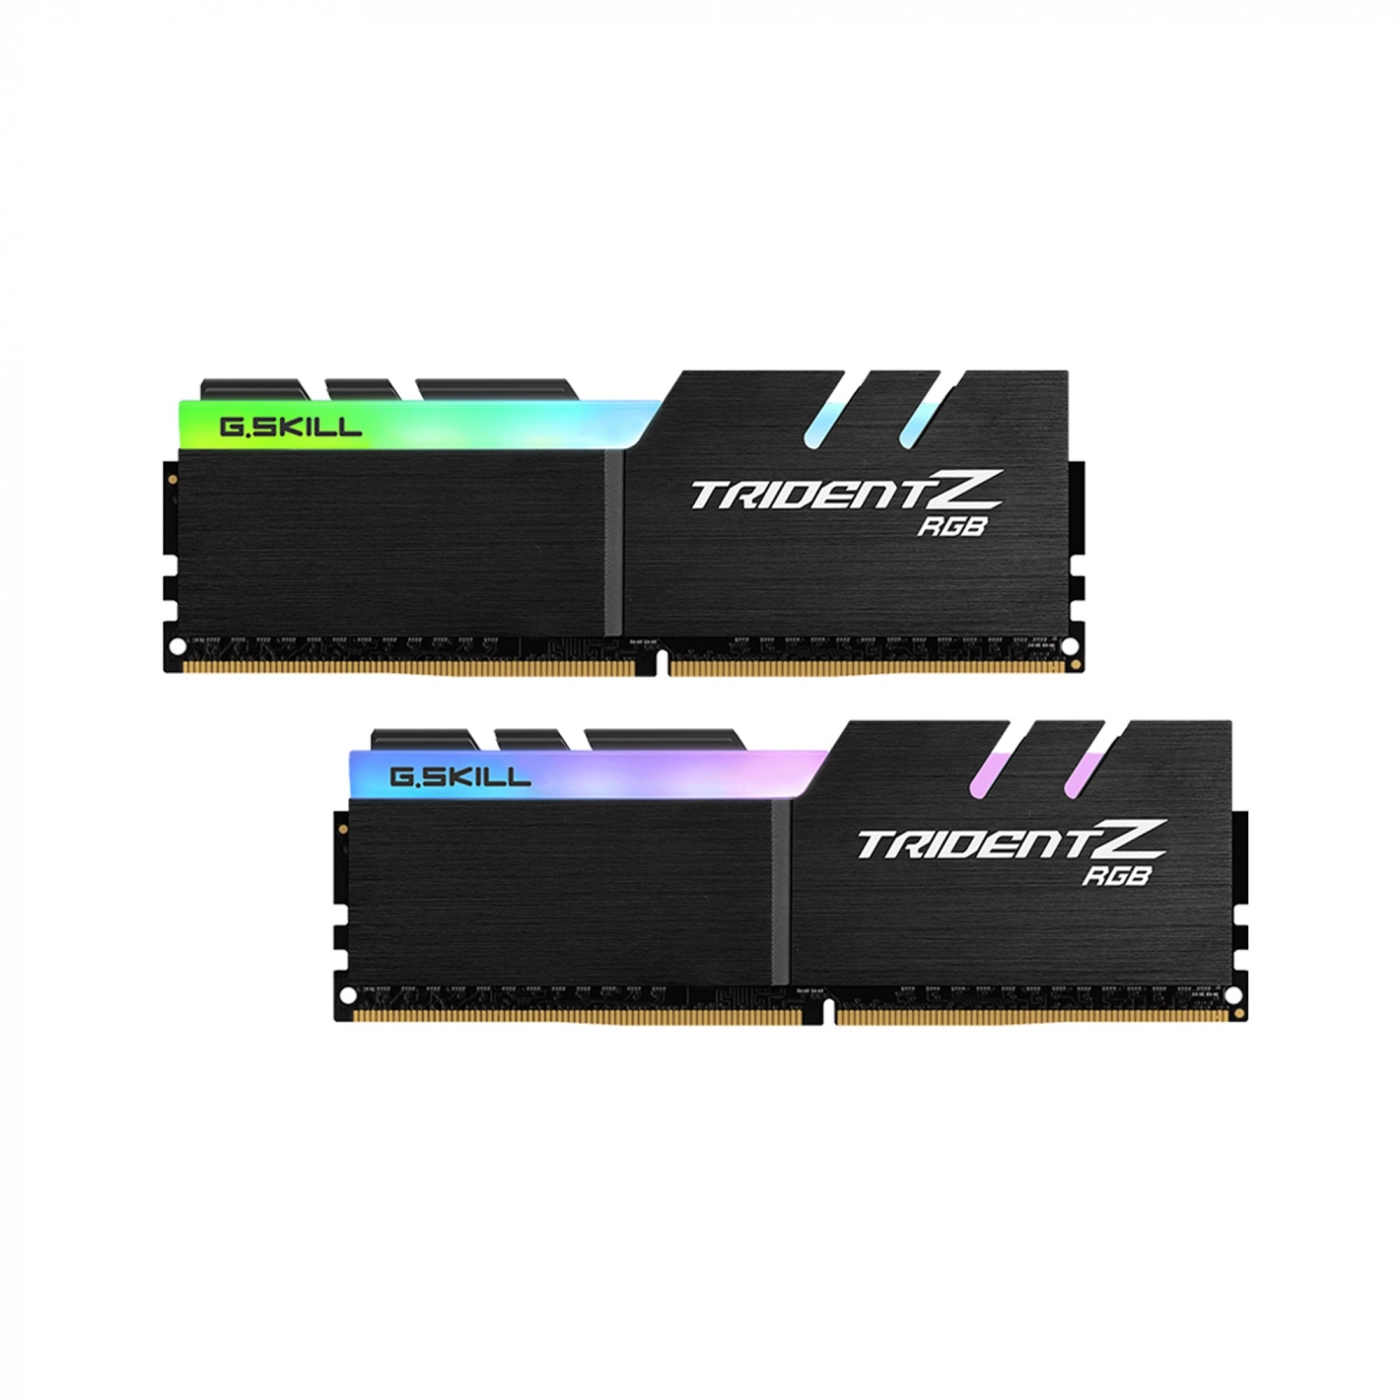 Купити Модуль пам'яті G.Skill Trident Z RGB DDR4-3200 CL16-18-18-38 1.35V 32GB (2x16GB) - фото 1